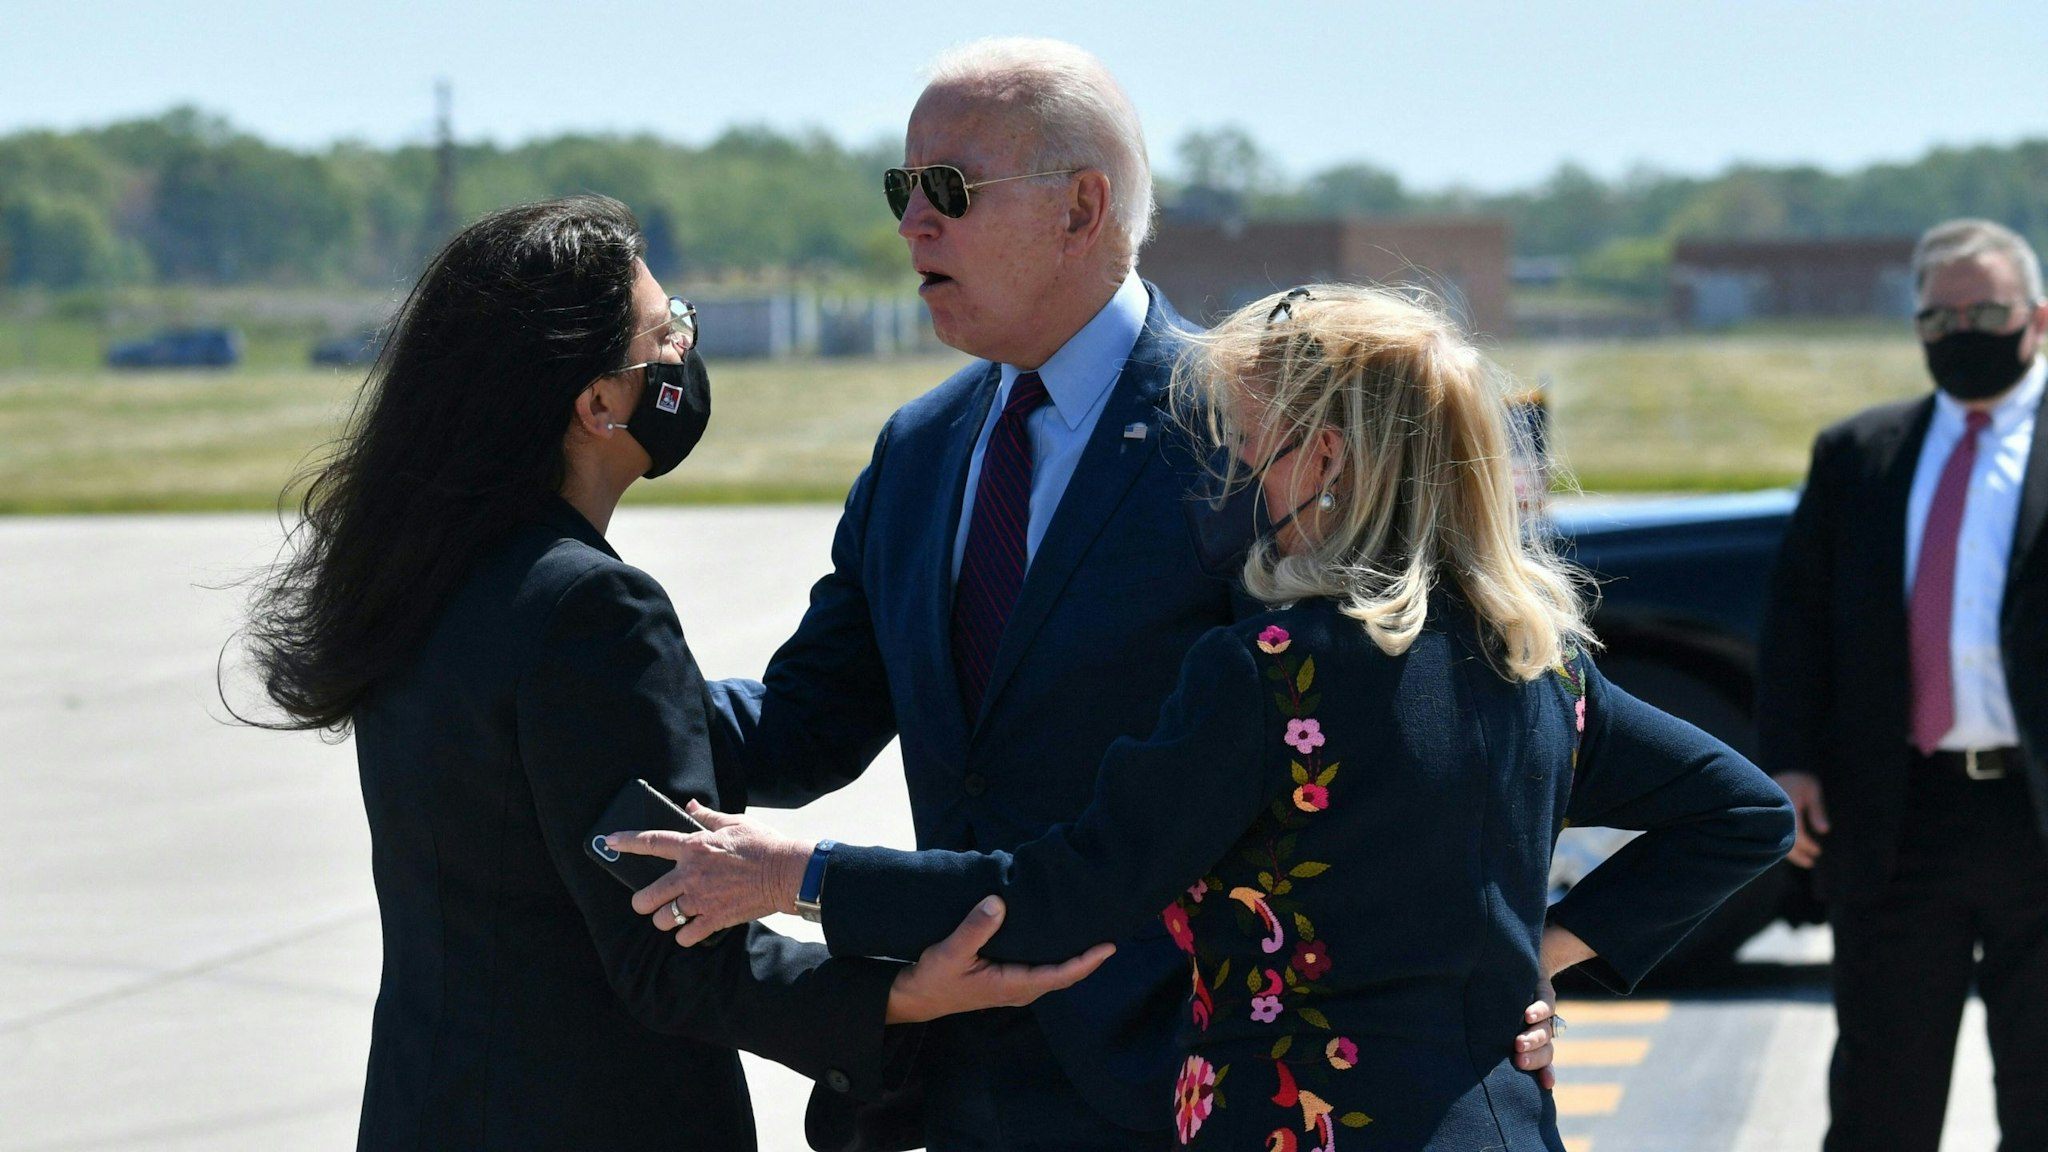 US President Joe Biden speaks with Representative Rashida Taib (D-Mich), and Representative Debbie Dingell (D-Mich)(R), as he arrives at Detroit, Metropolitan Wayne County Airport in Detroit, Michigan on May 18, 2021.